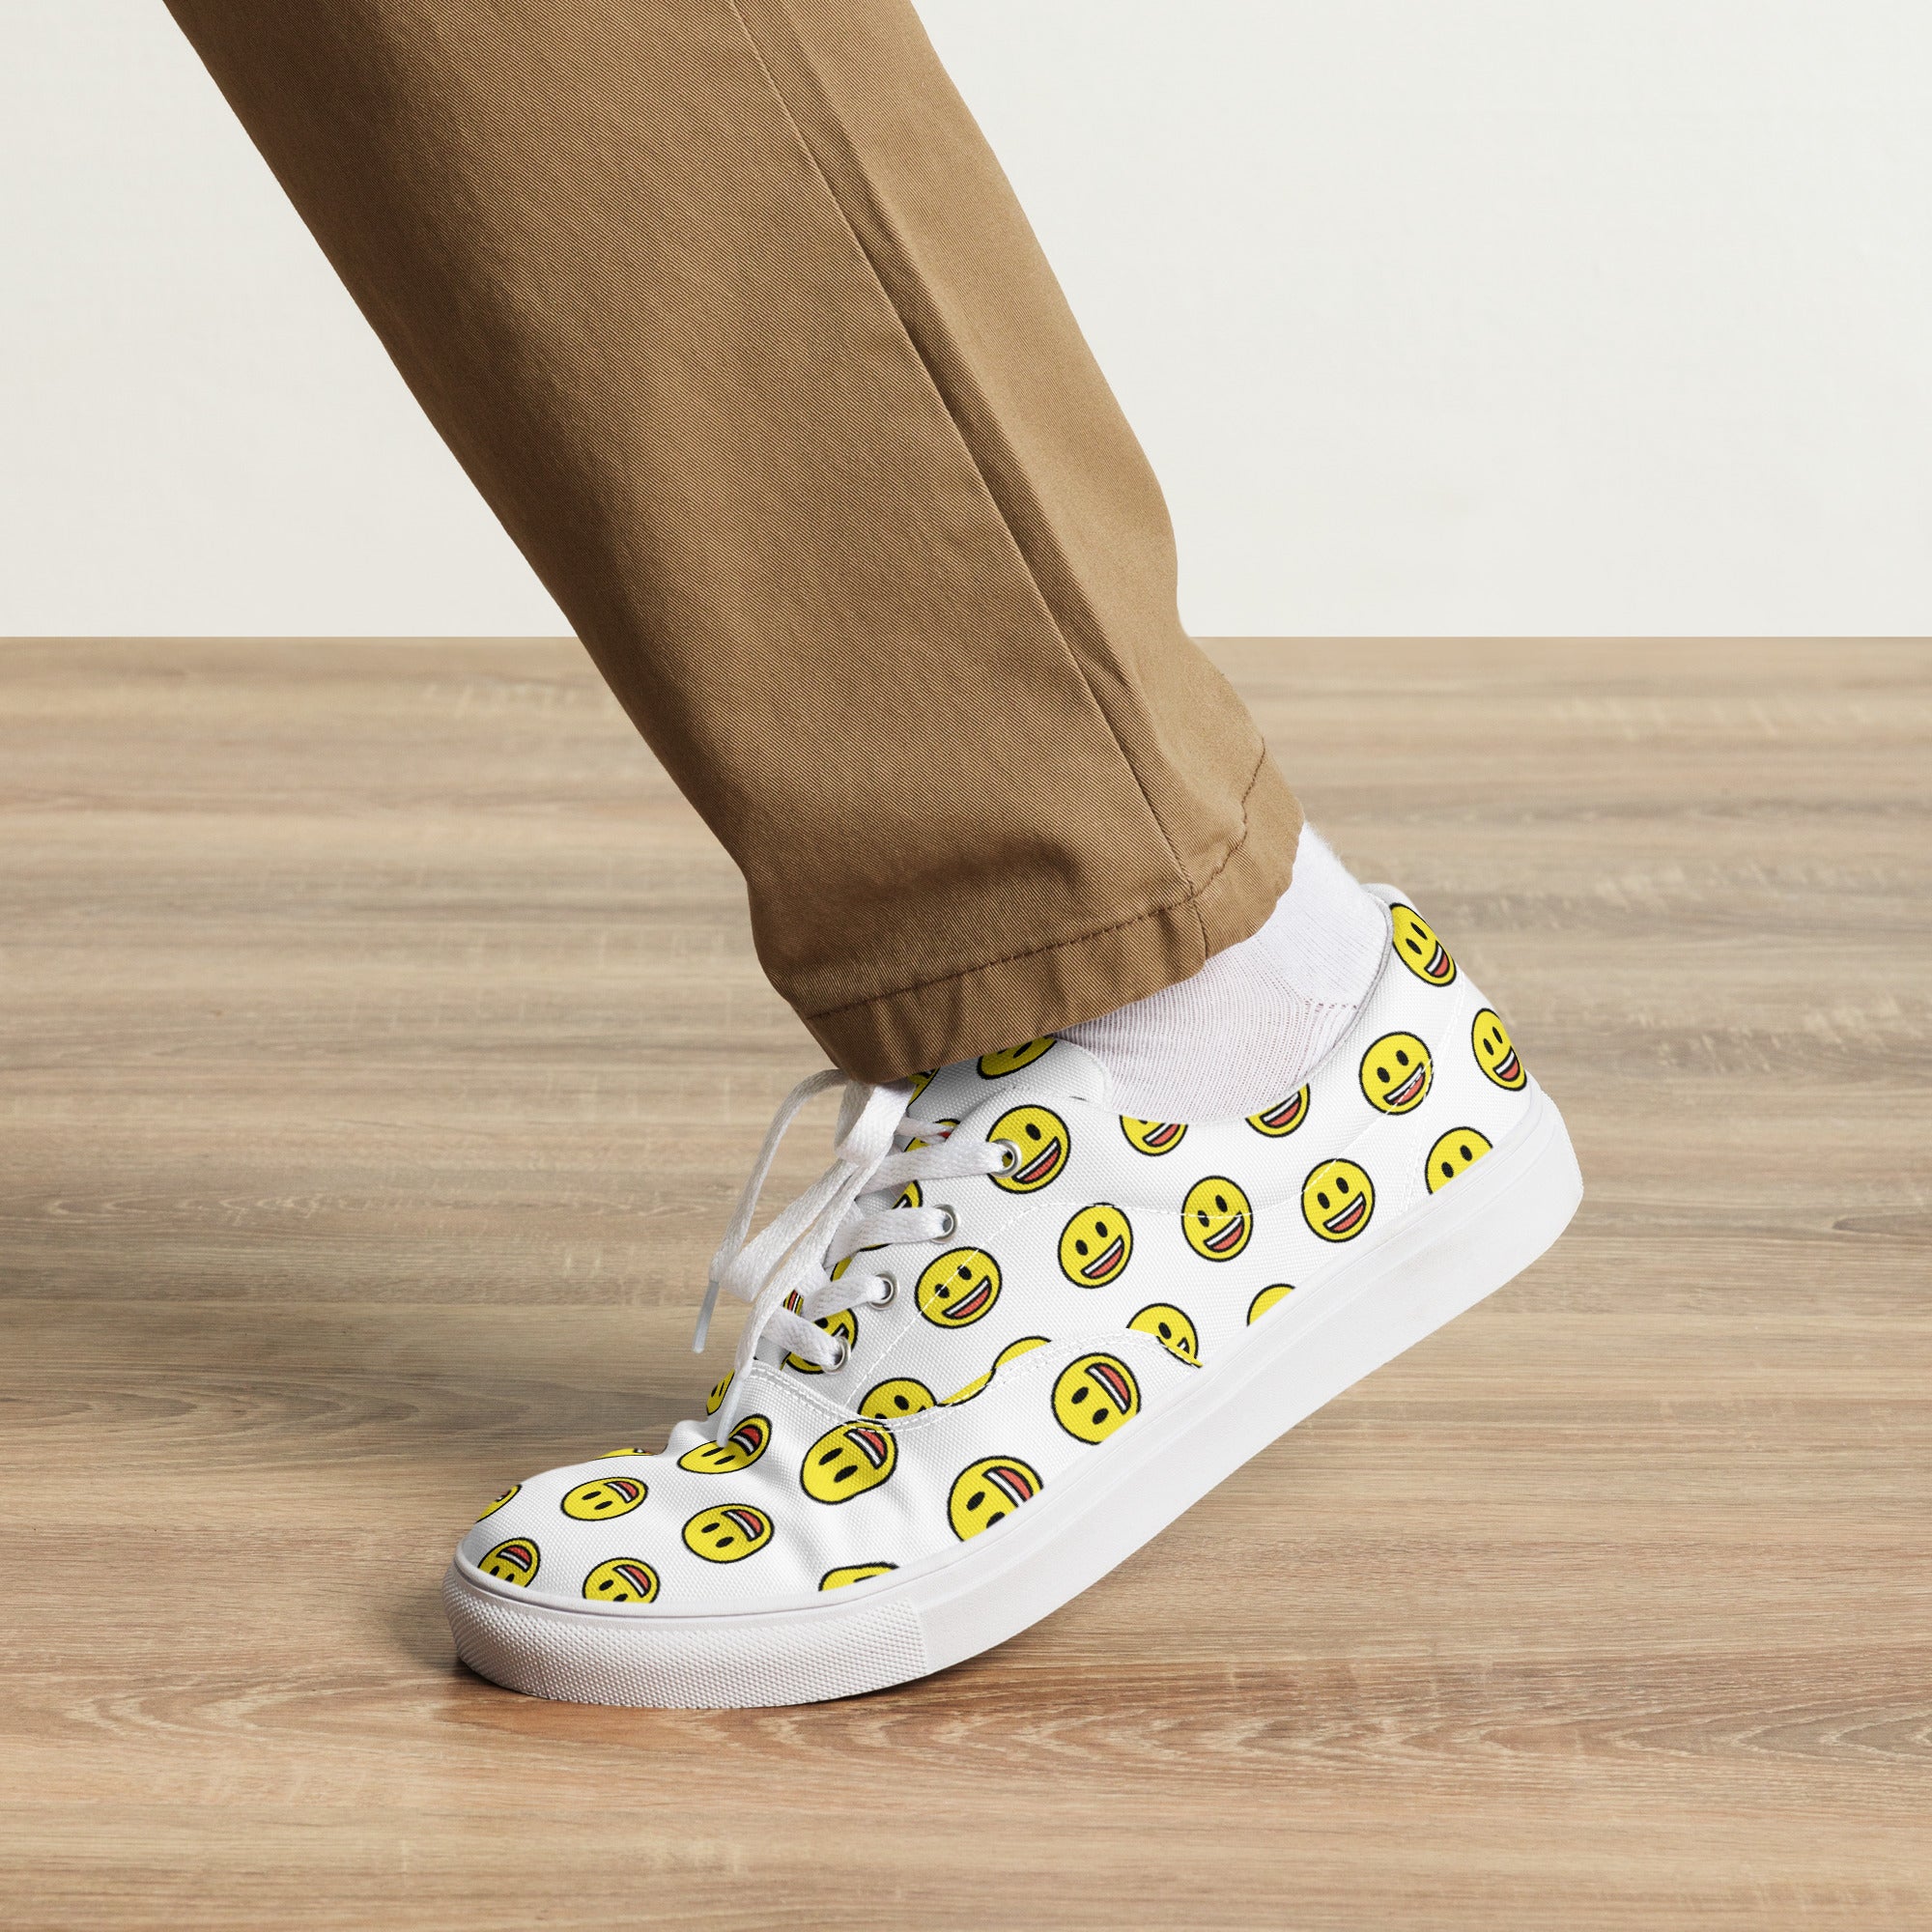 Chitelli's Happy Face Emoji Men's Canvas Shoes